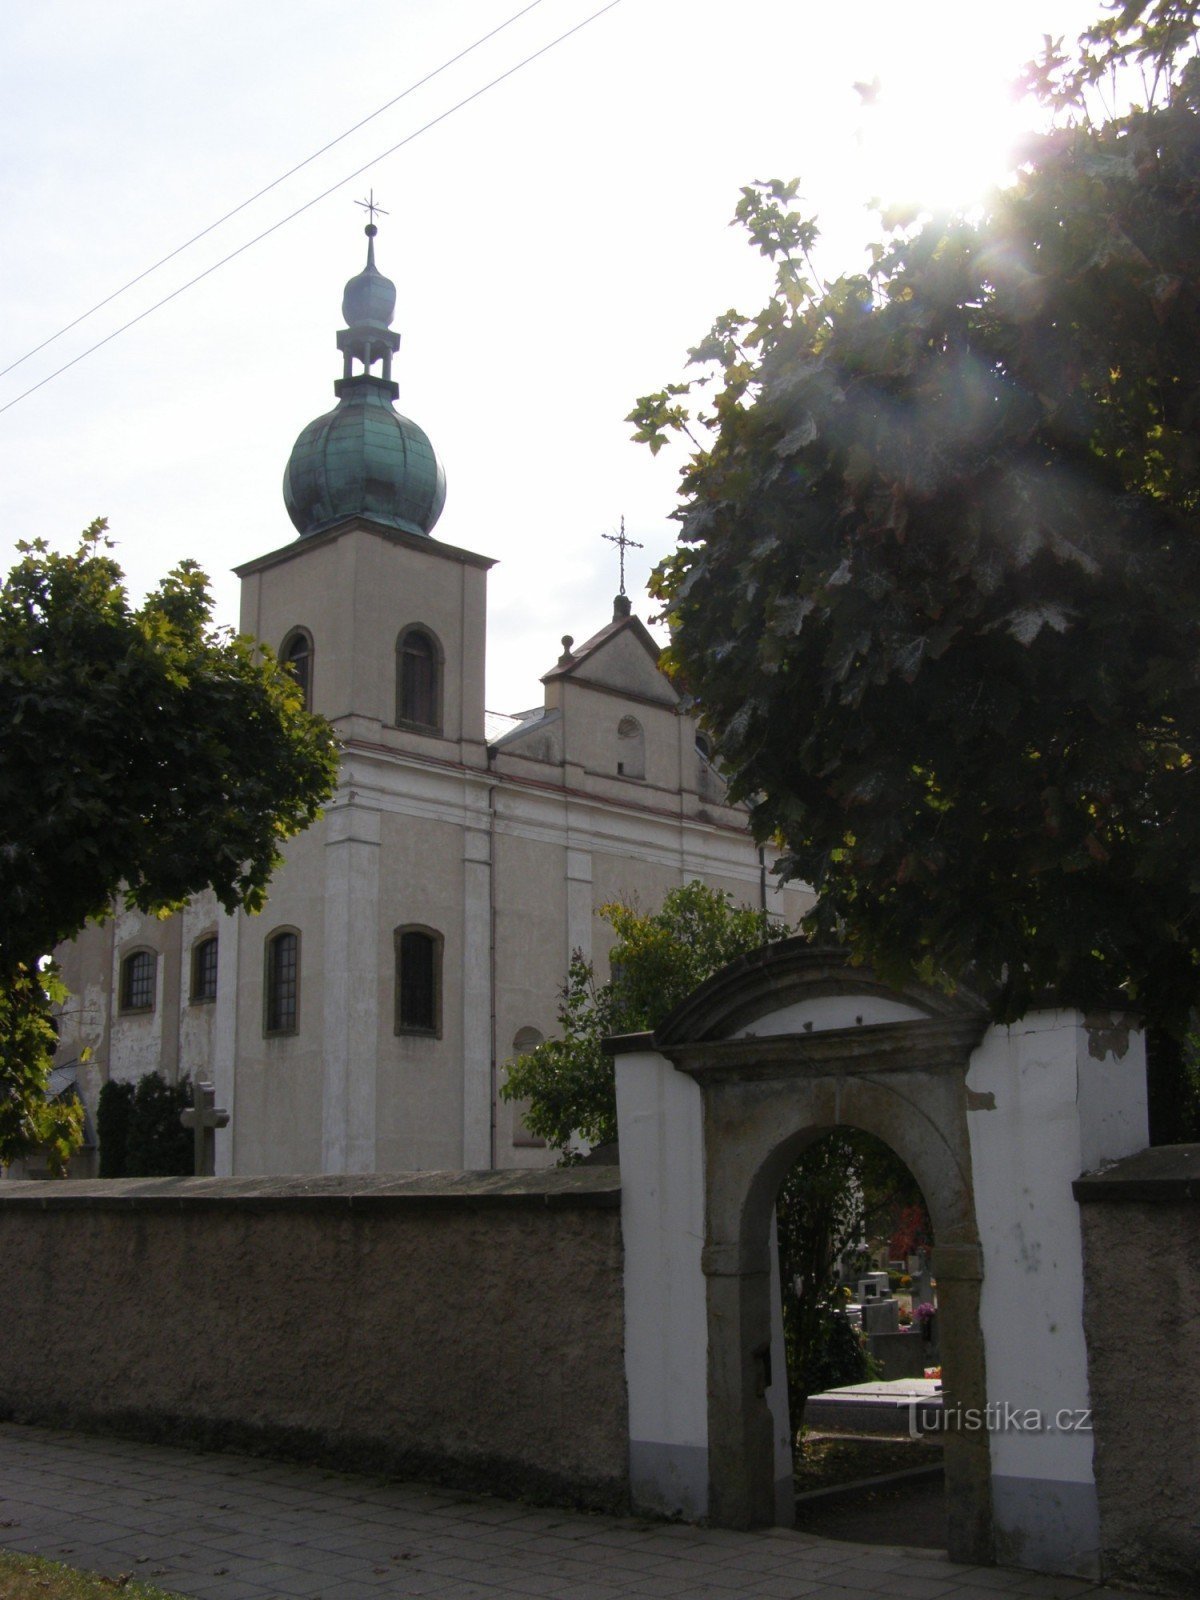 Kostelec nad Orlicí - Chiesa di S. Anna